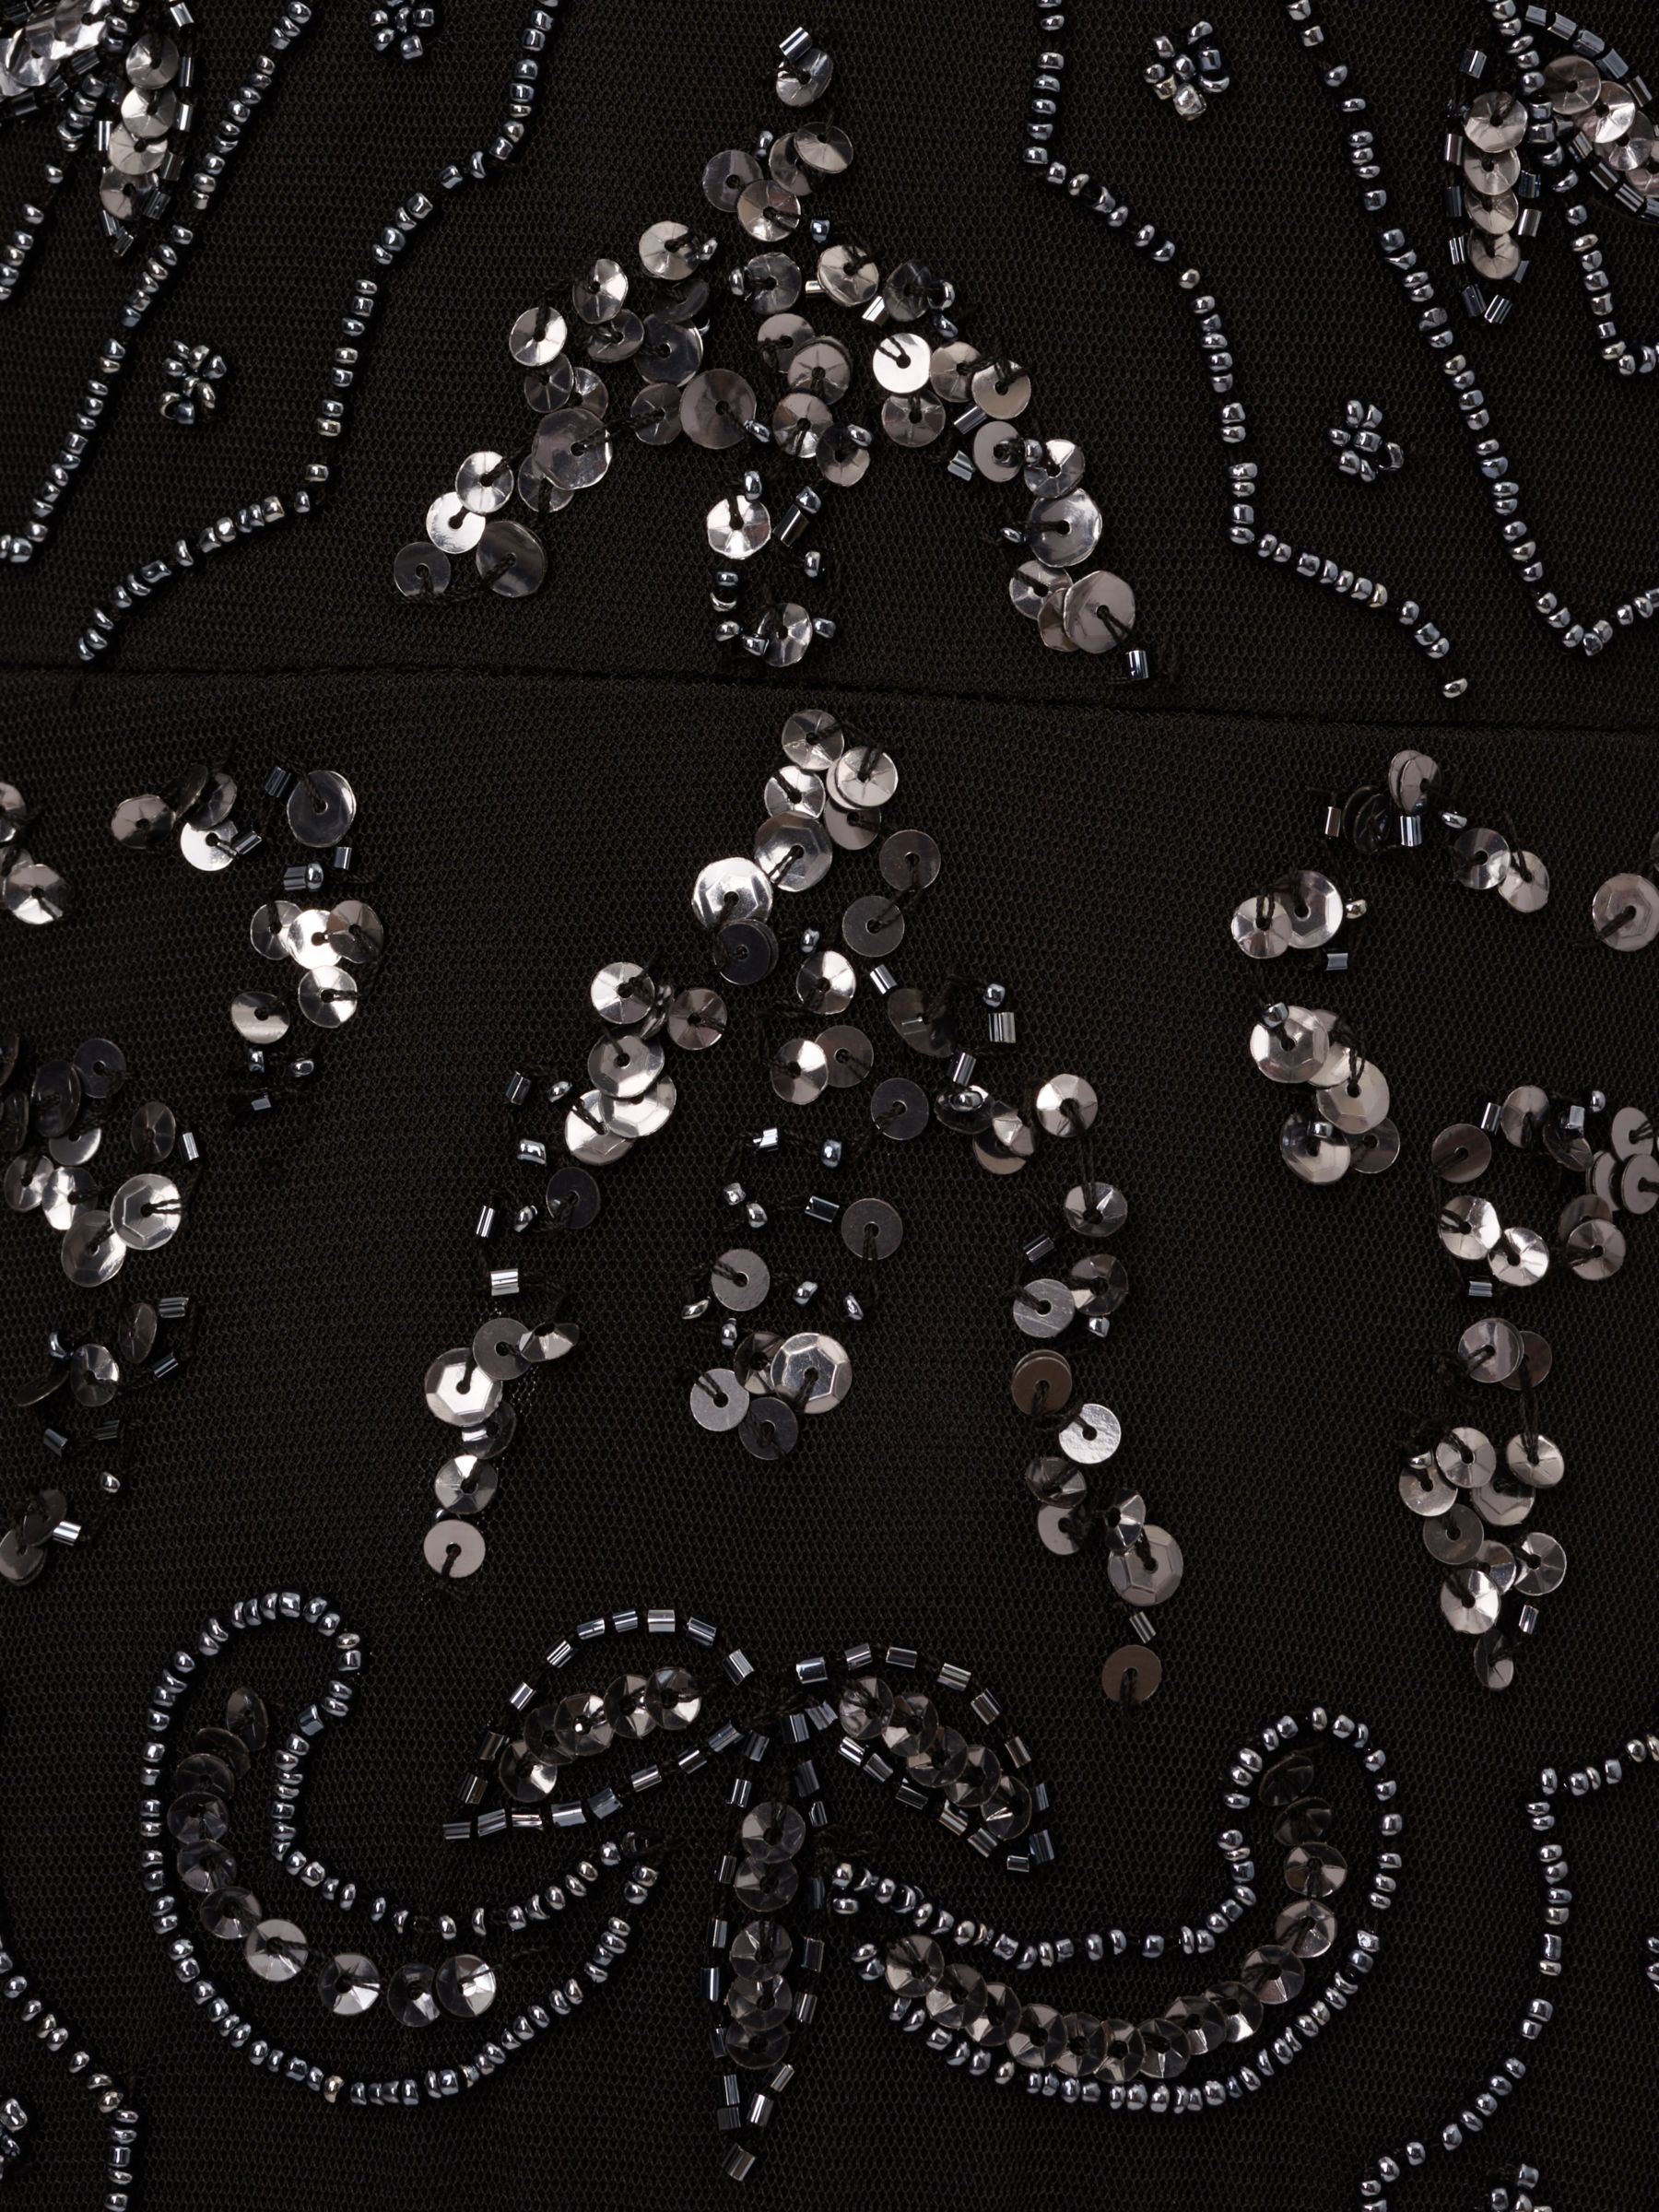 Adrianna Papell Beaded Midi Dress, Black/Gunmetal at John Lewis & Partners